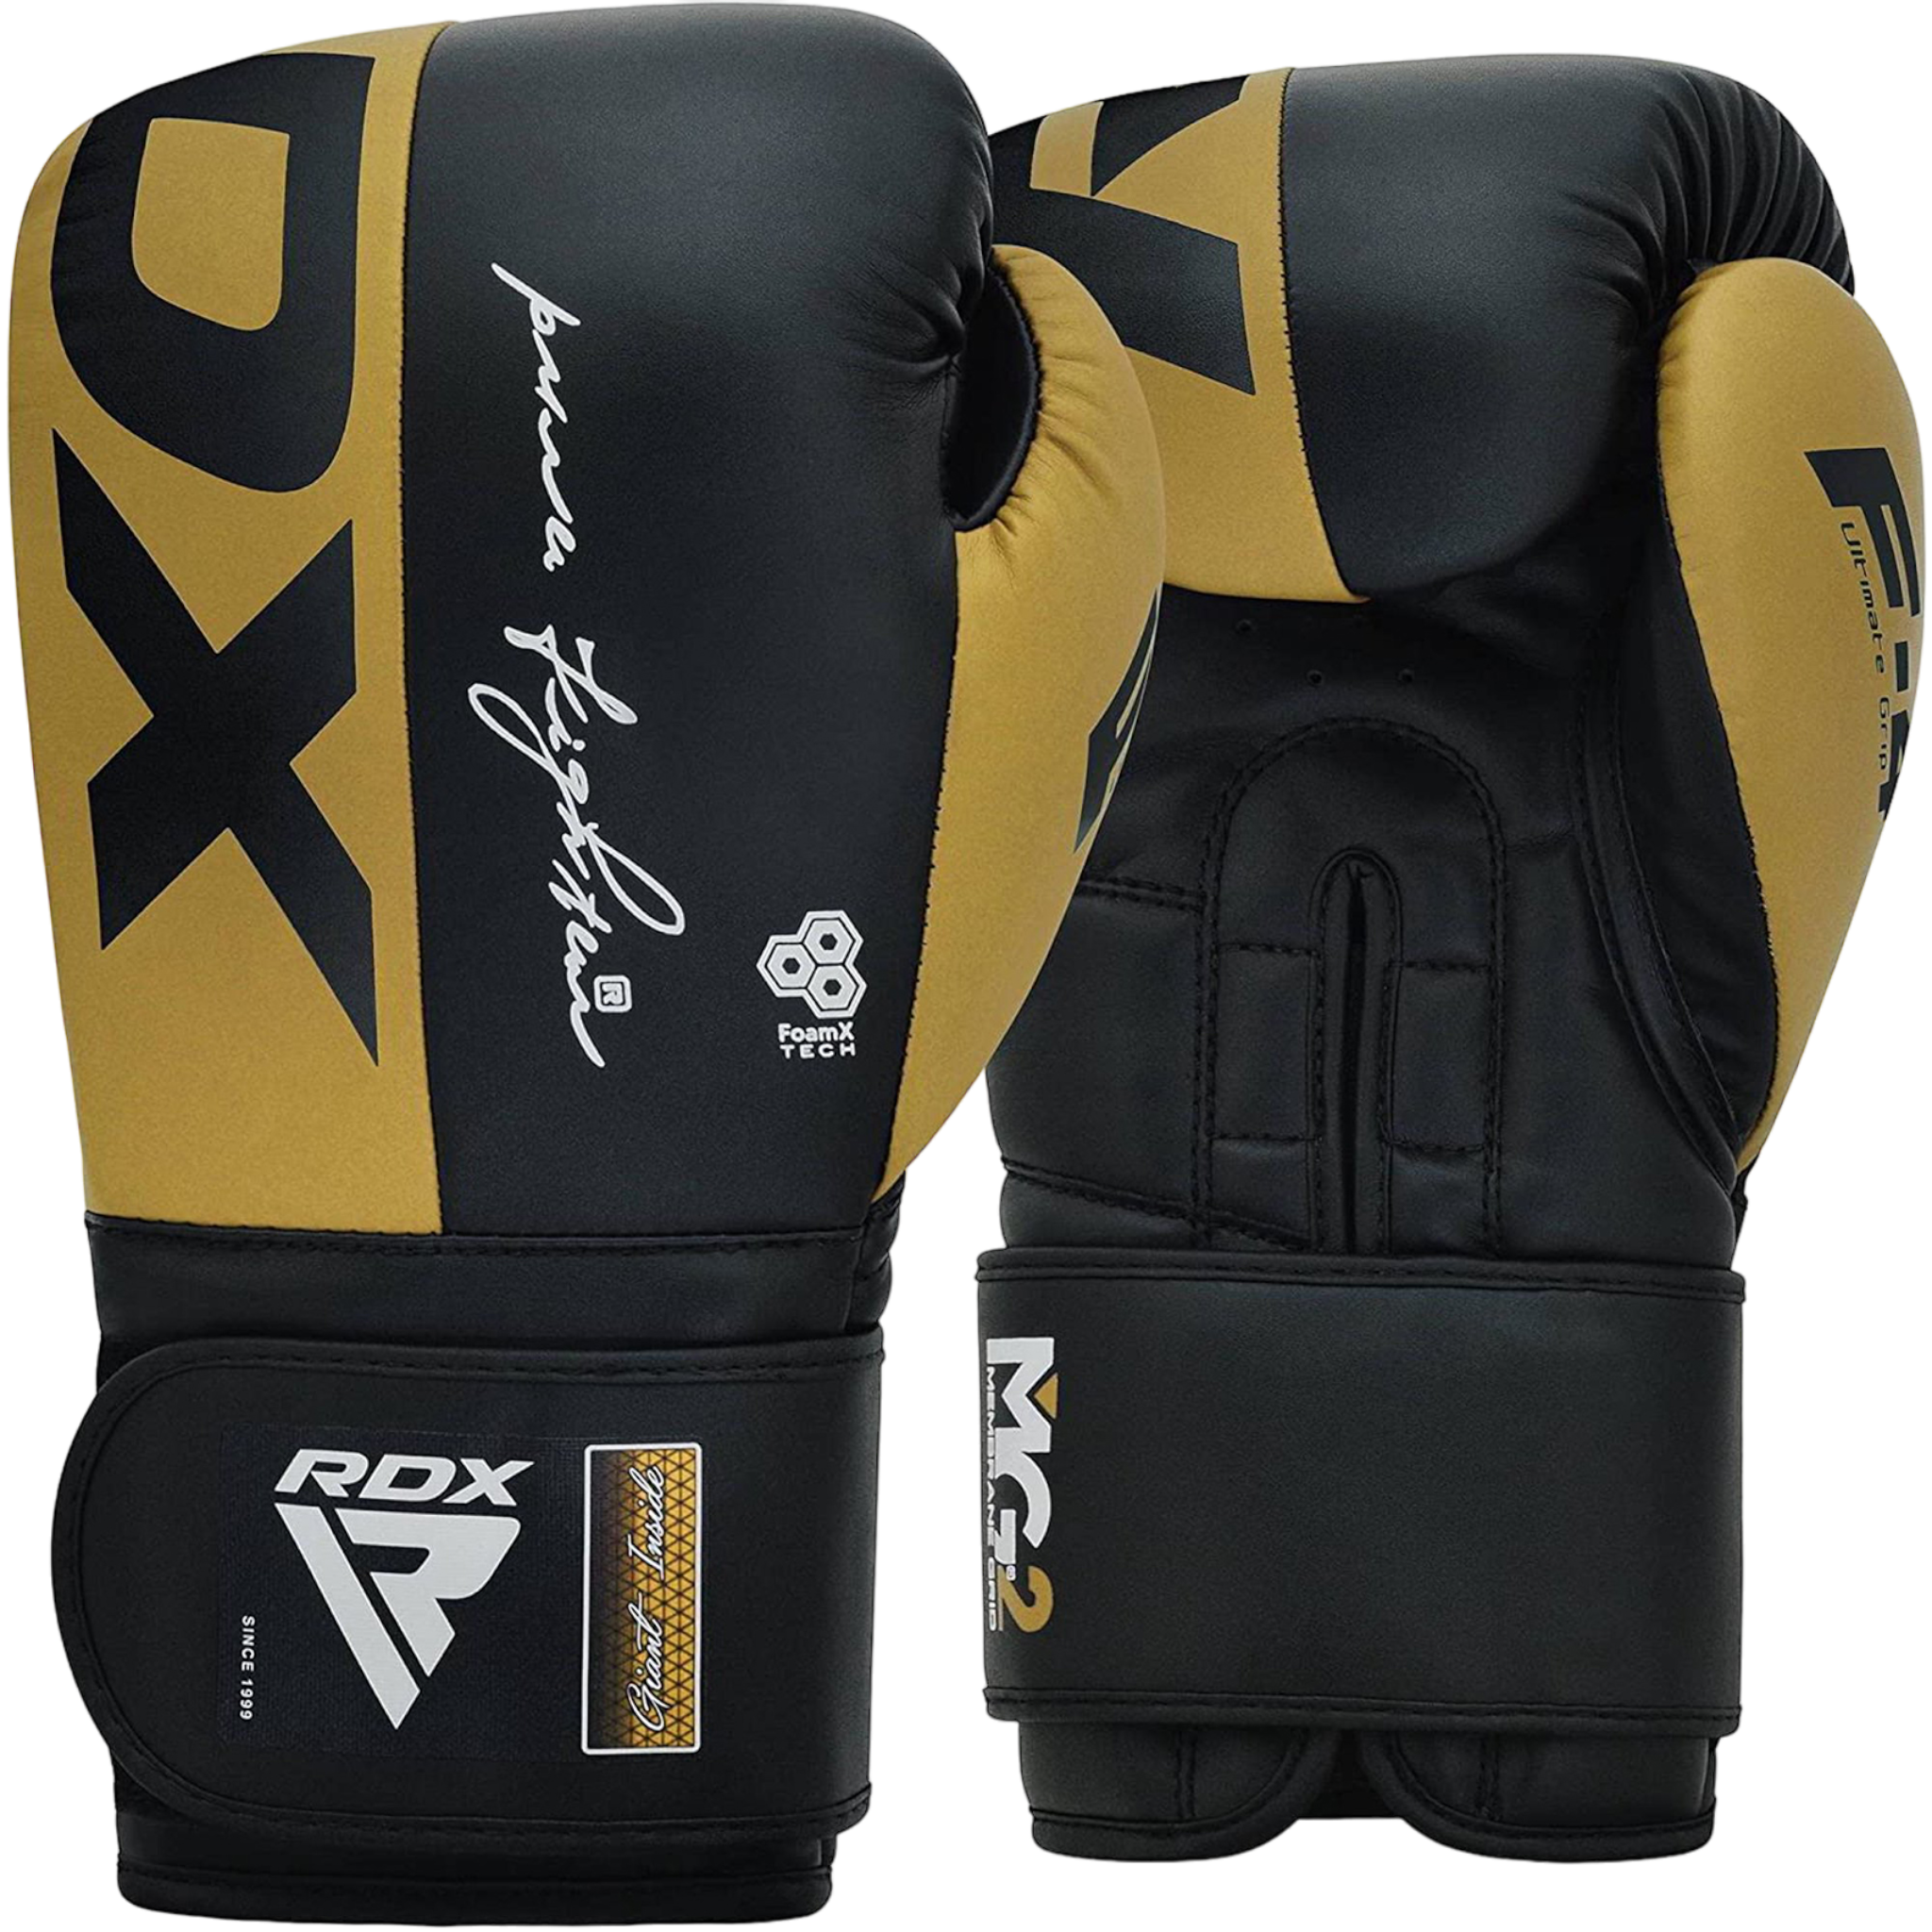 RDX REX F4 MMA, BJJ, Muay Thai, Kickboxing, Training Boxing Gloves - GOLDEN/BLACK - 16oz - Pro-Distributing